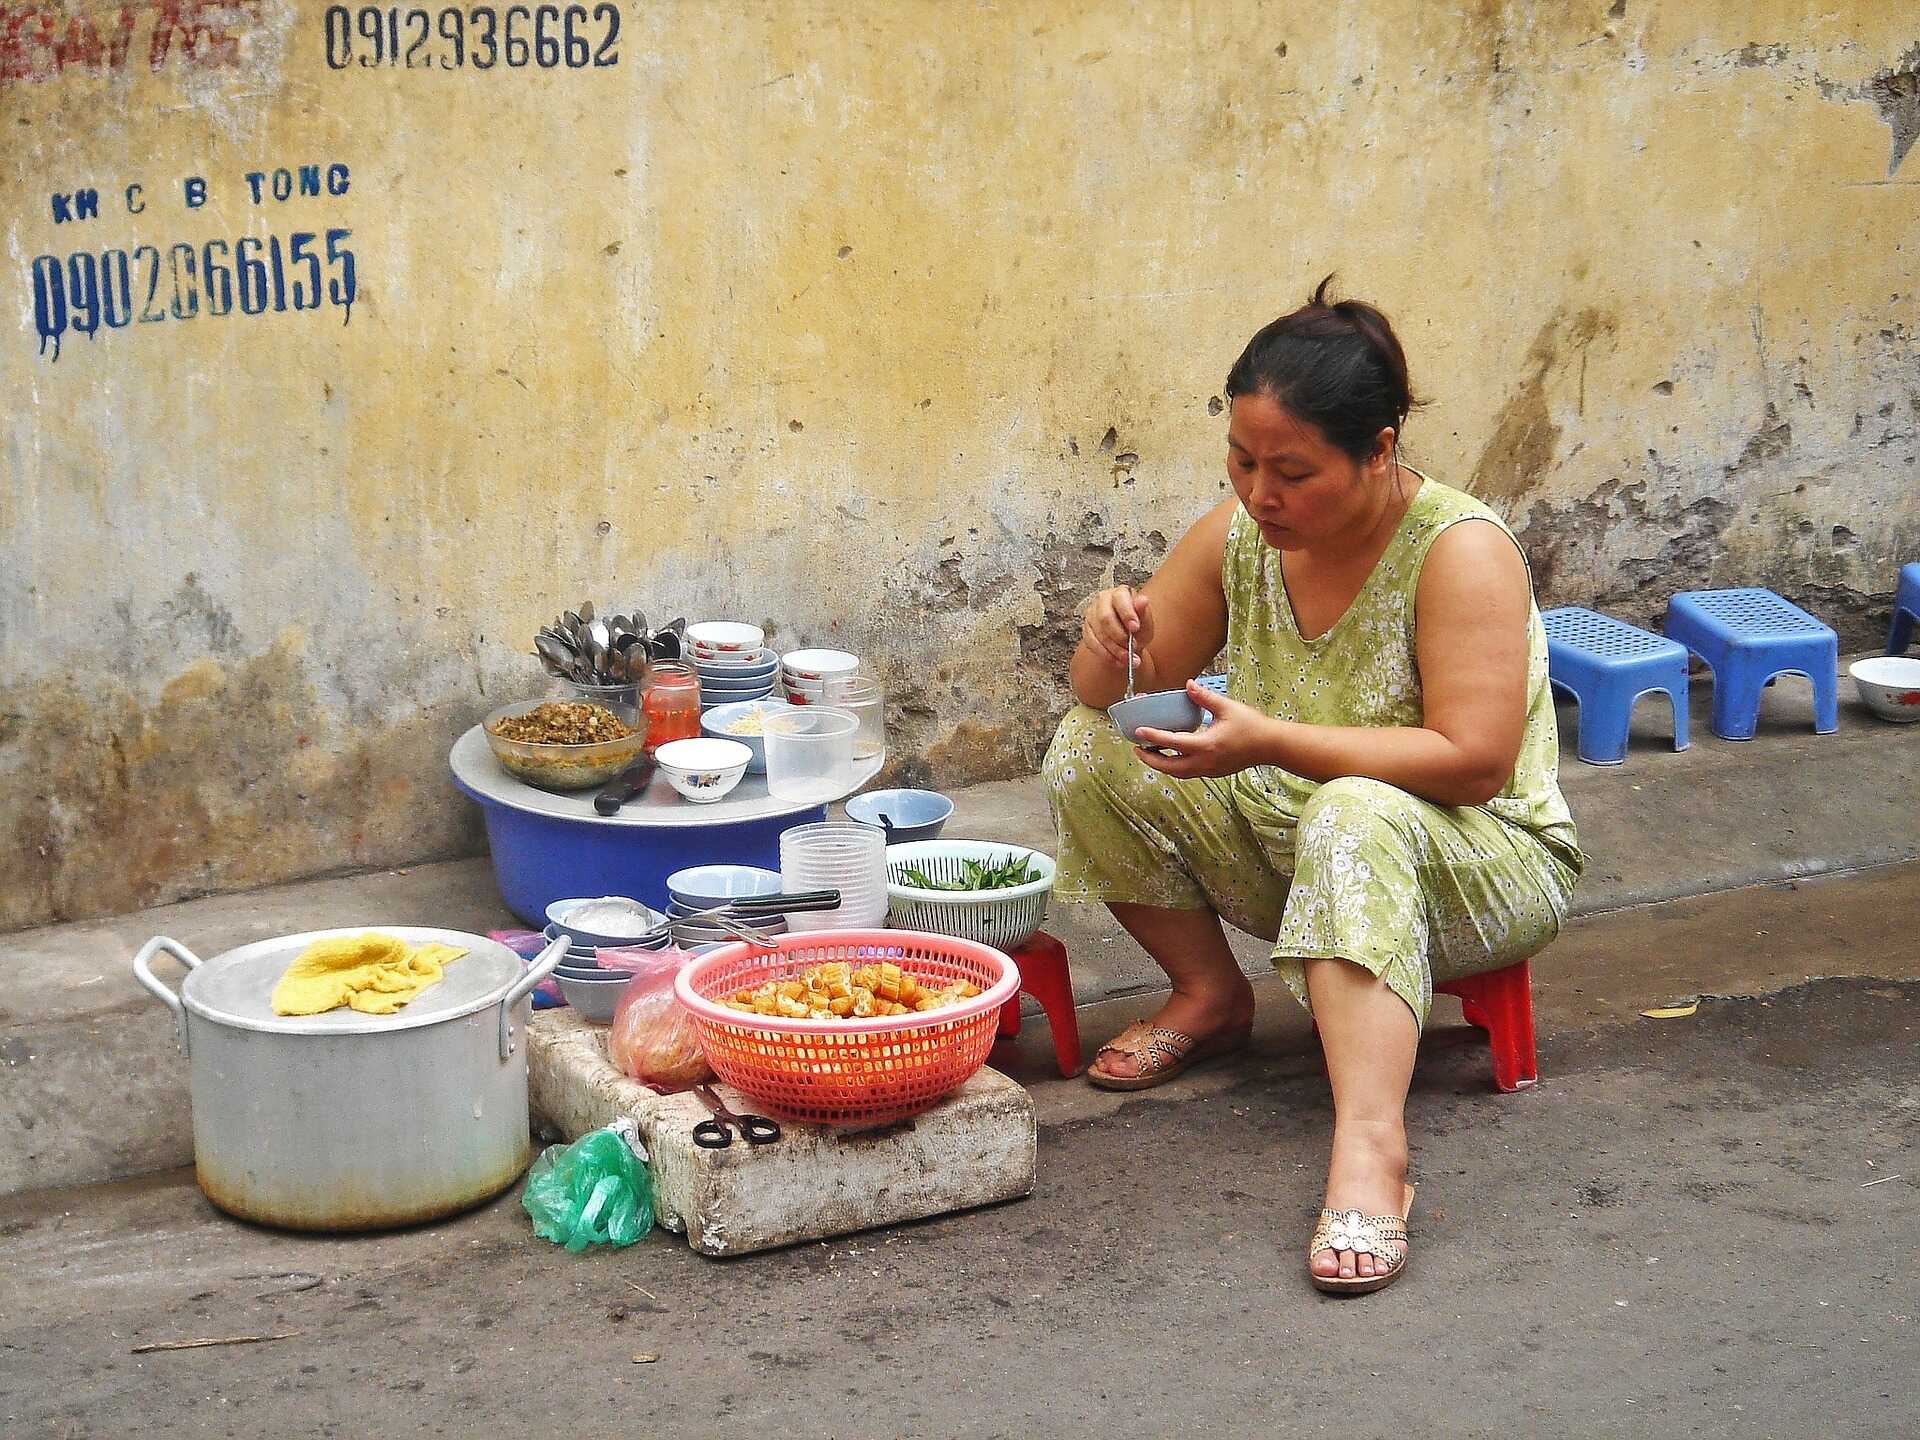 Street Food in Vietnam